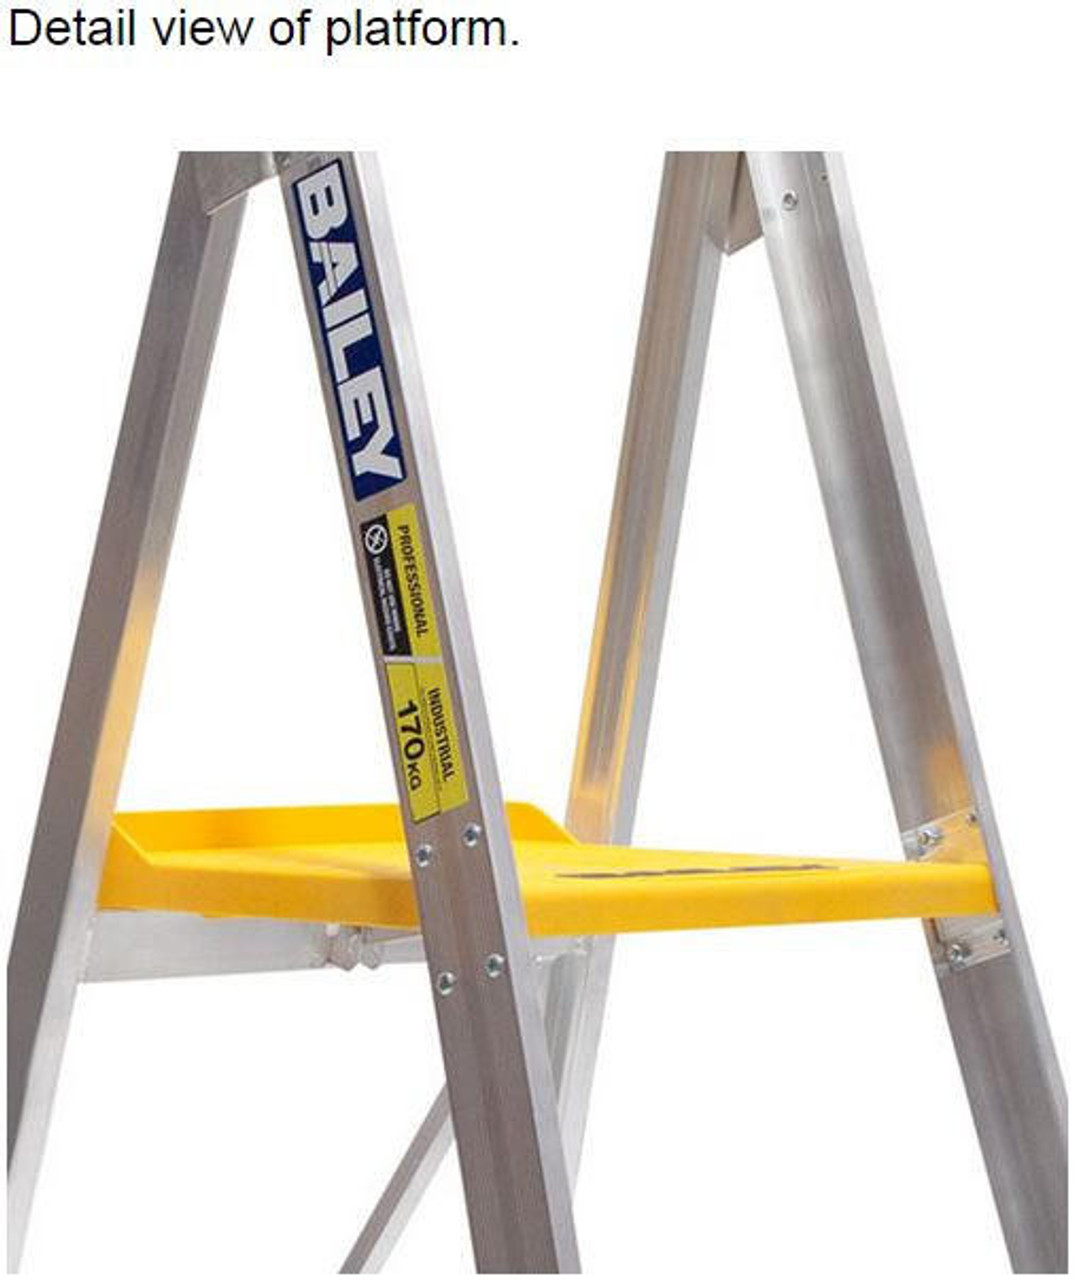 Bailey platform ladder aluminium 170kg platform height 0.6m professional FS13398